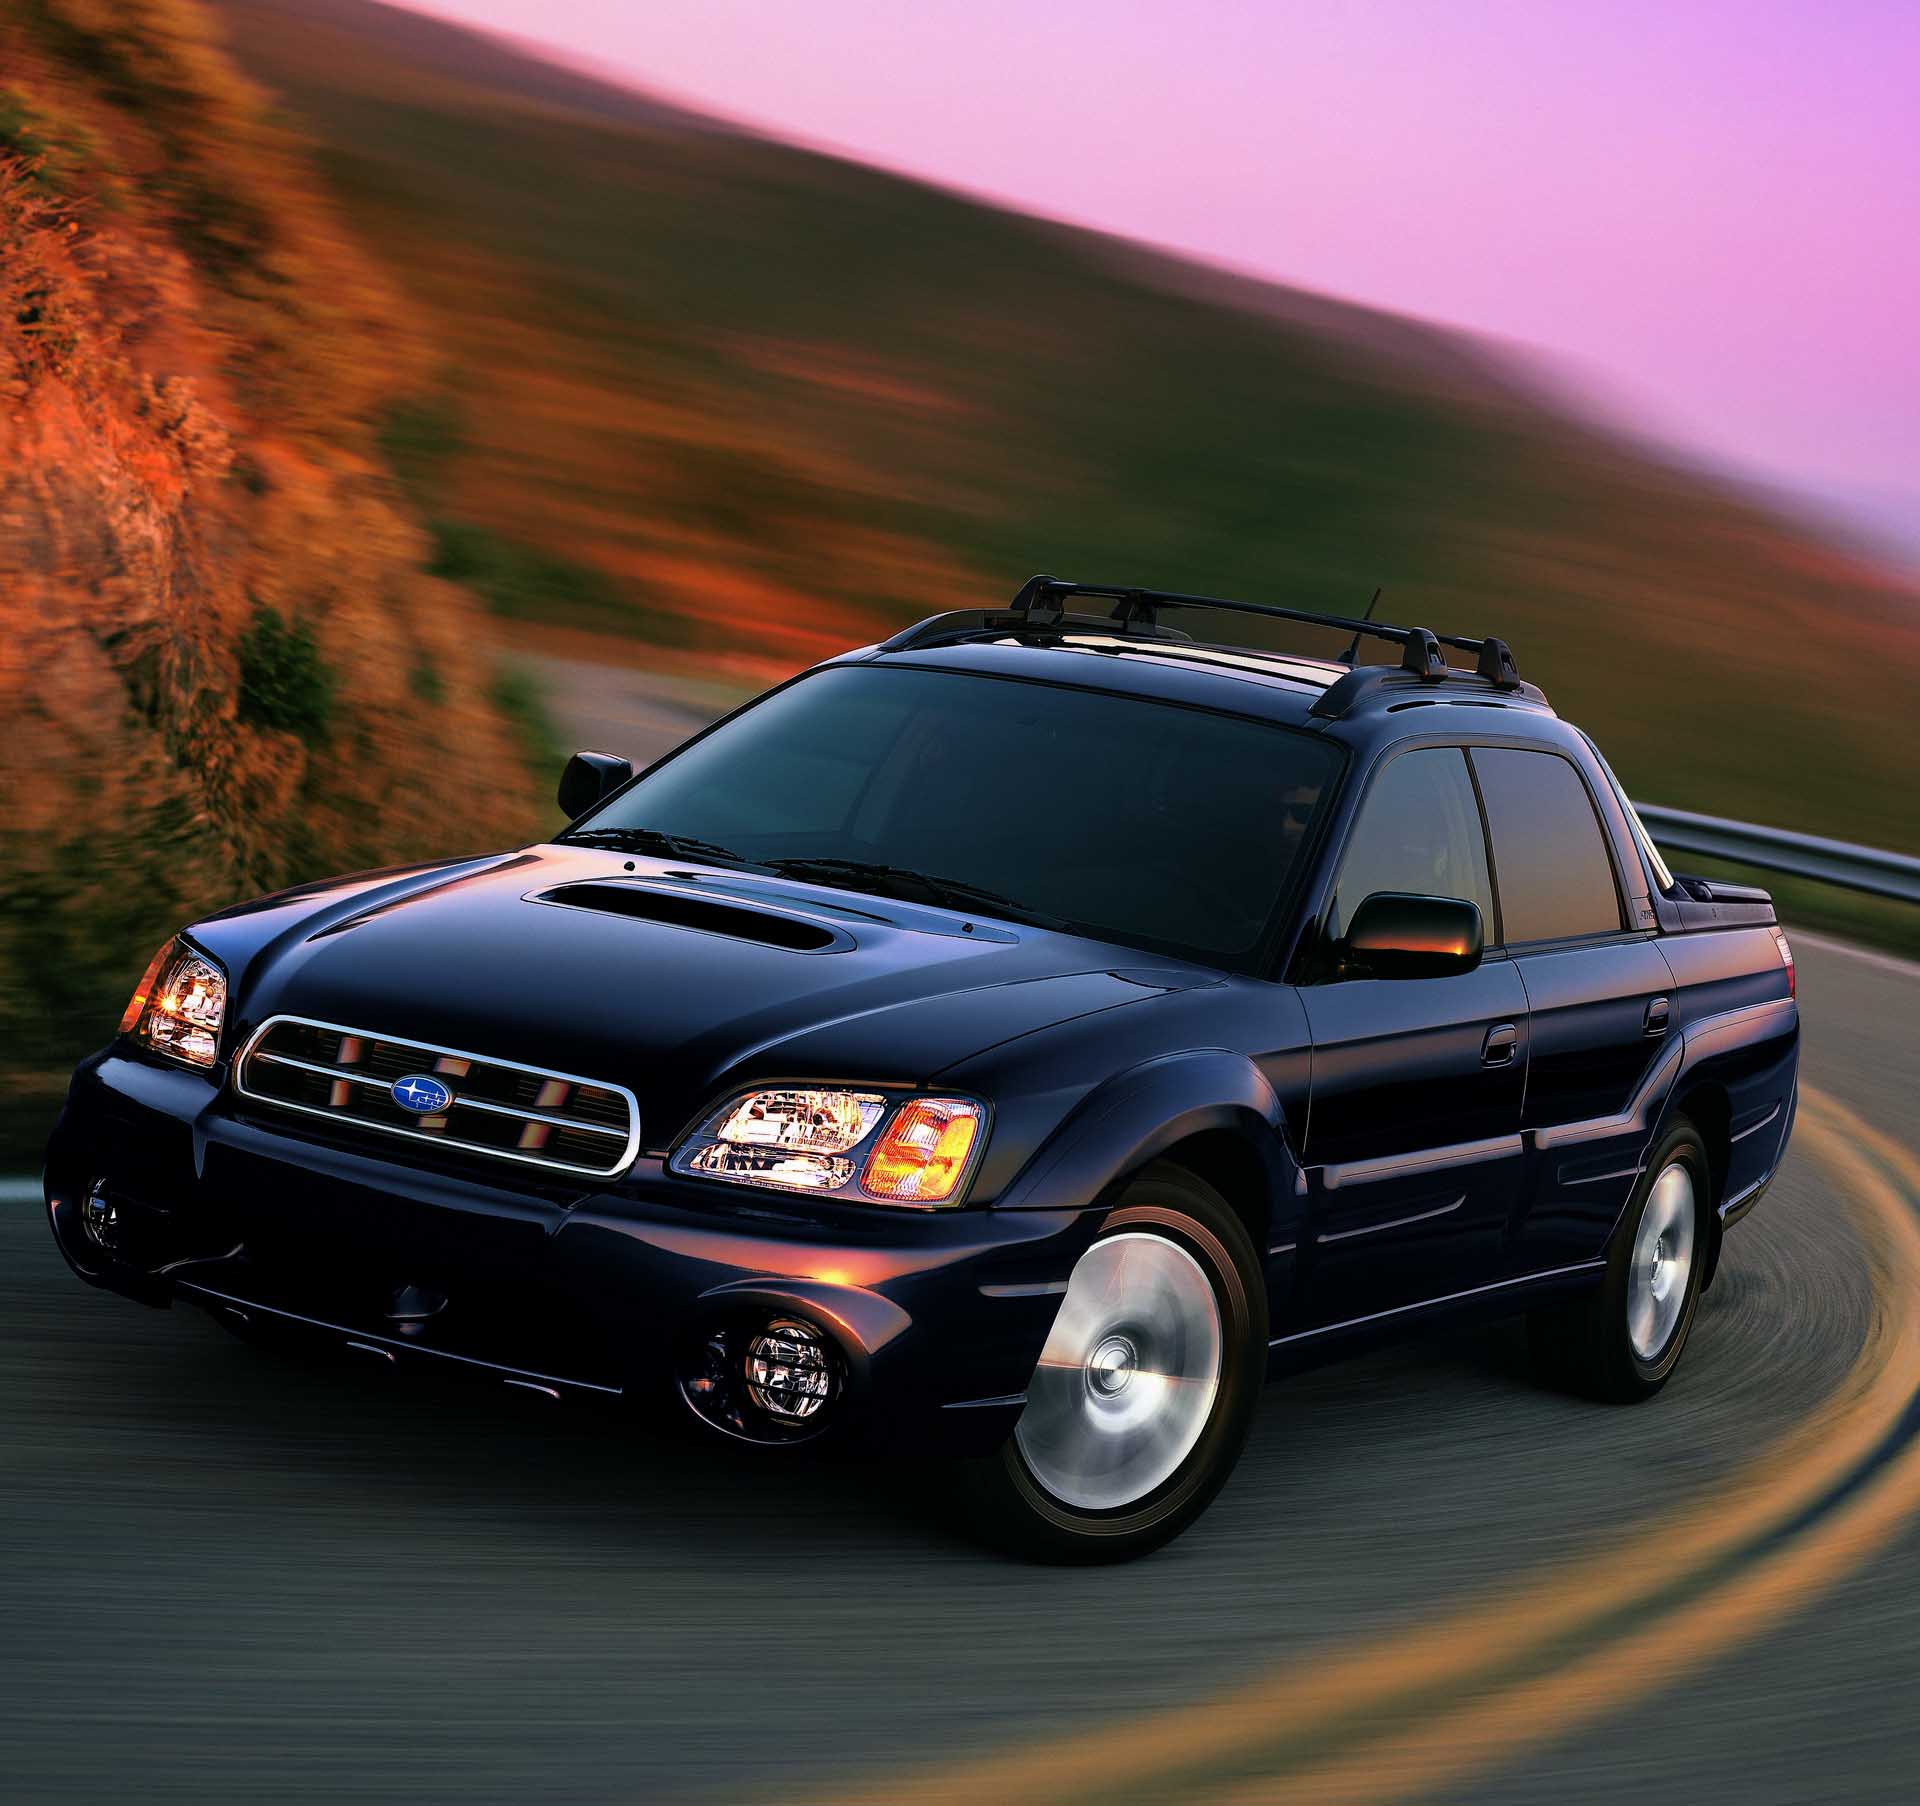 Berita, Subaru Baja: Ford Akan Kembangkan Pikap Berbasis Ford Focus, Ute?